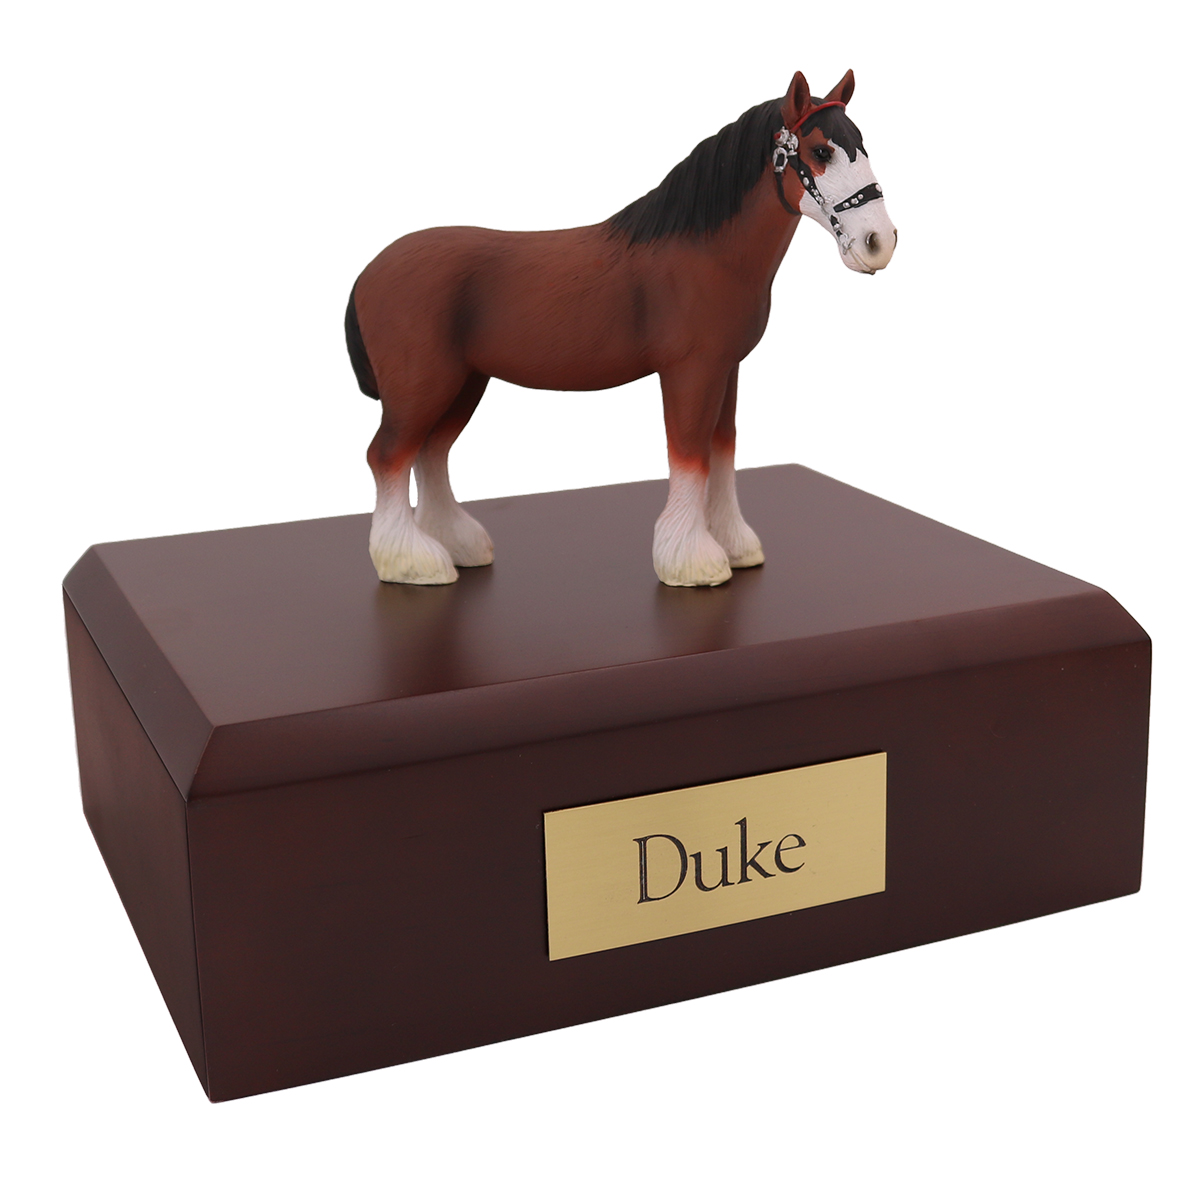 Horse, Clydesdale - Figurine Urn